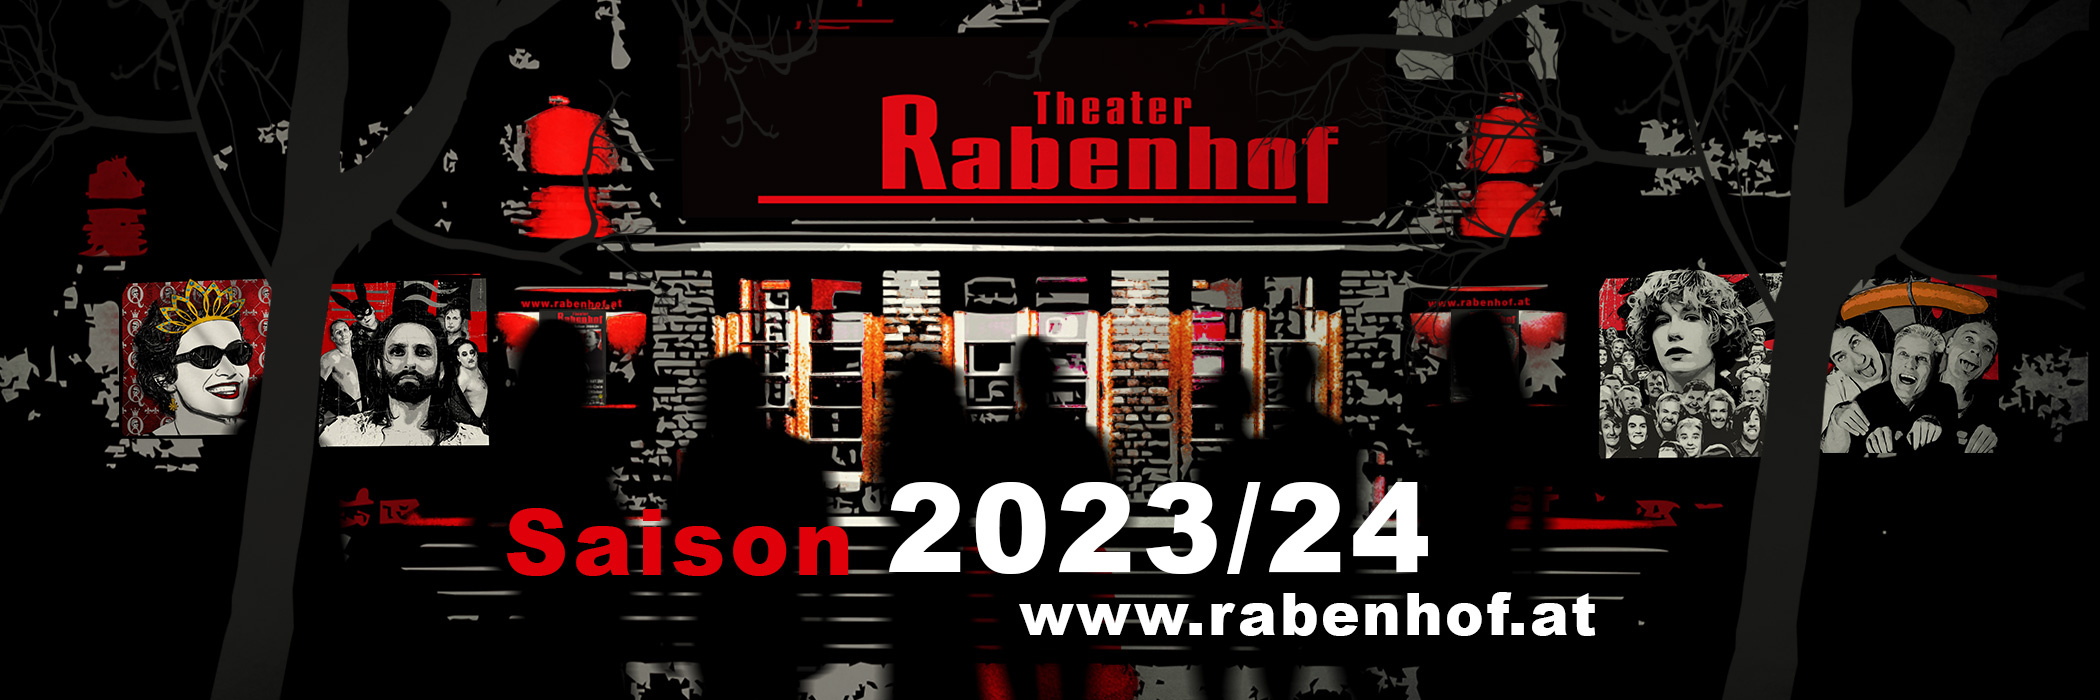 Rabenhof Theater | Saison 2023/24